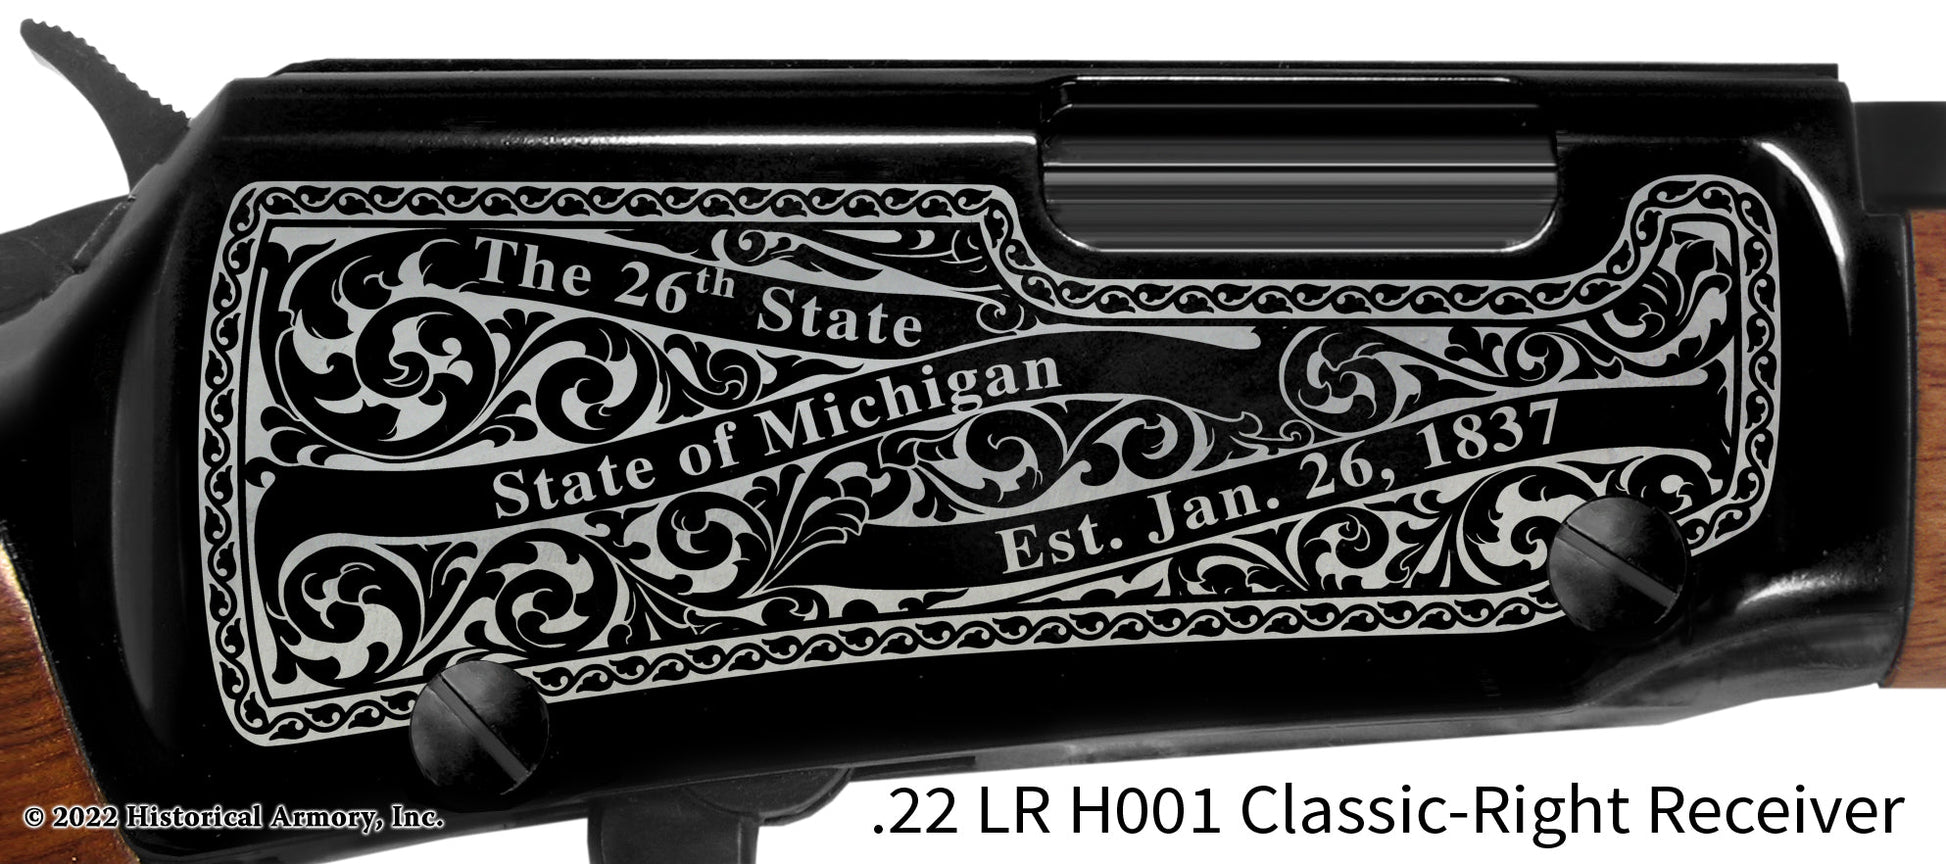 Sanilac County Michigan Engraved Henry H001 Rifle